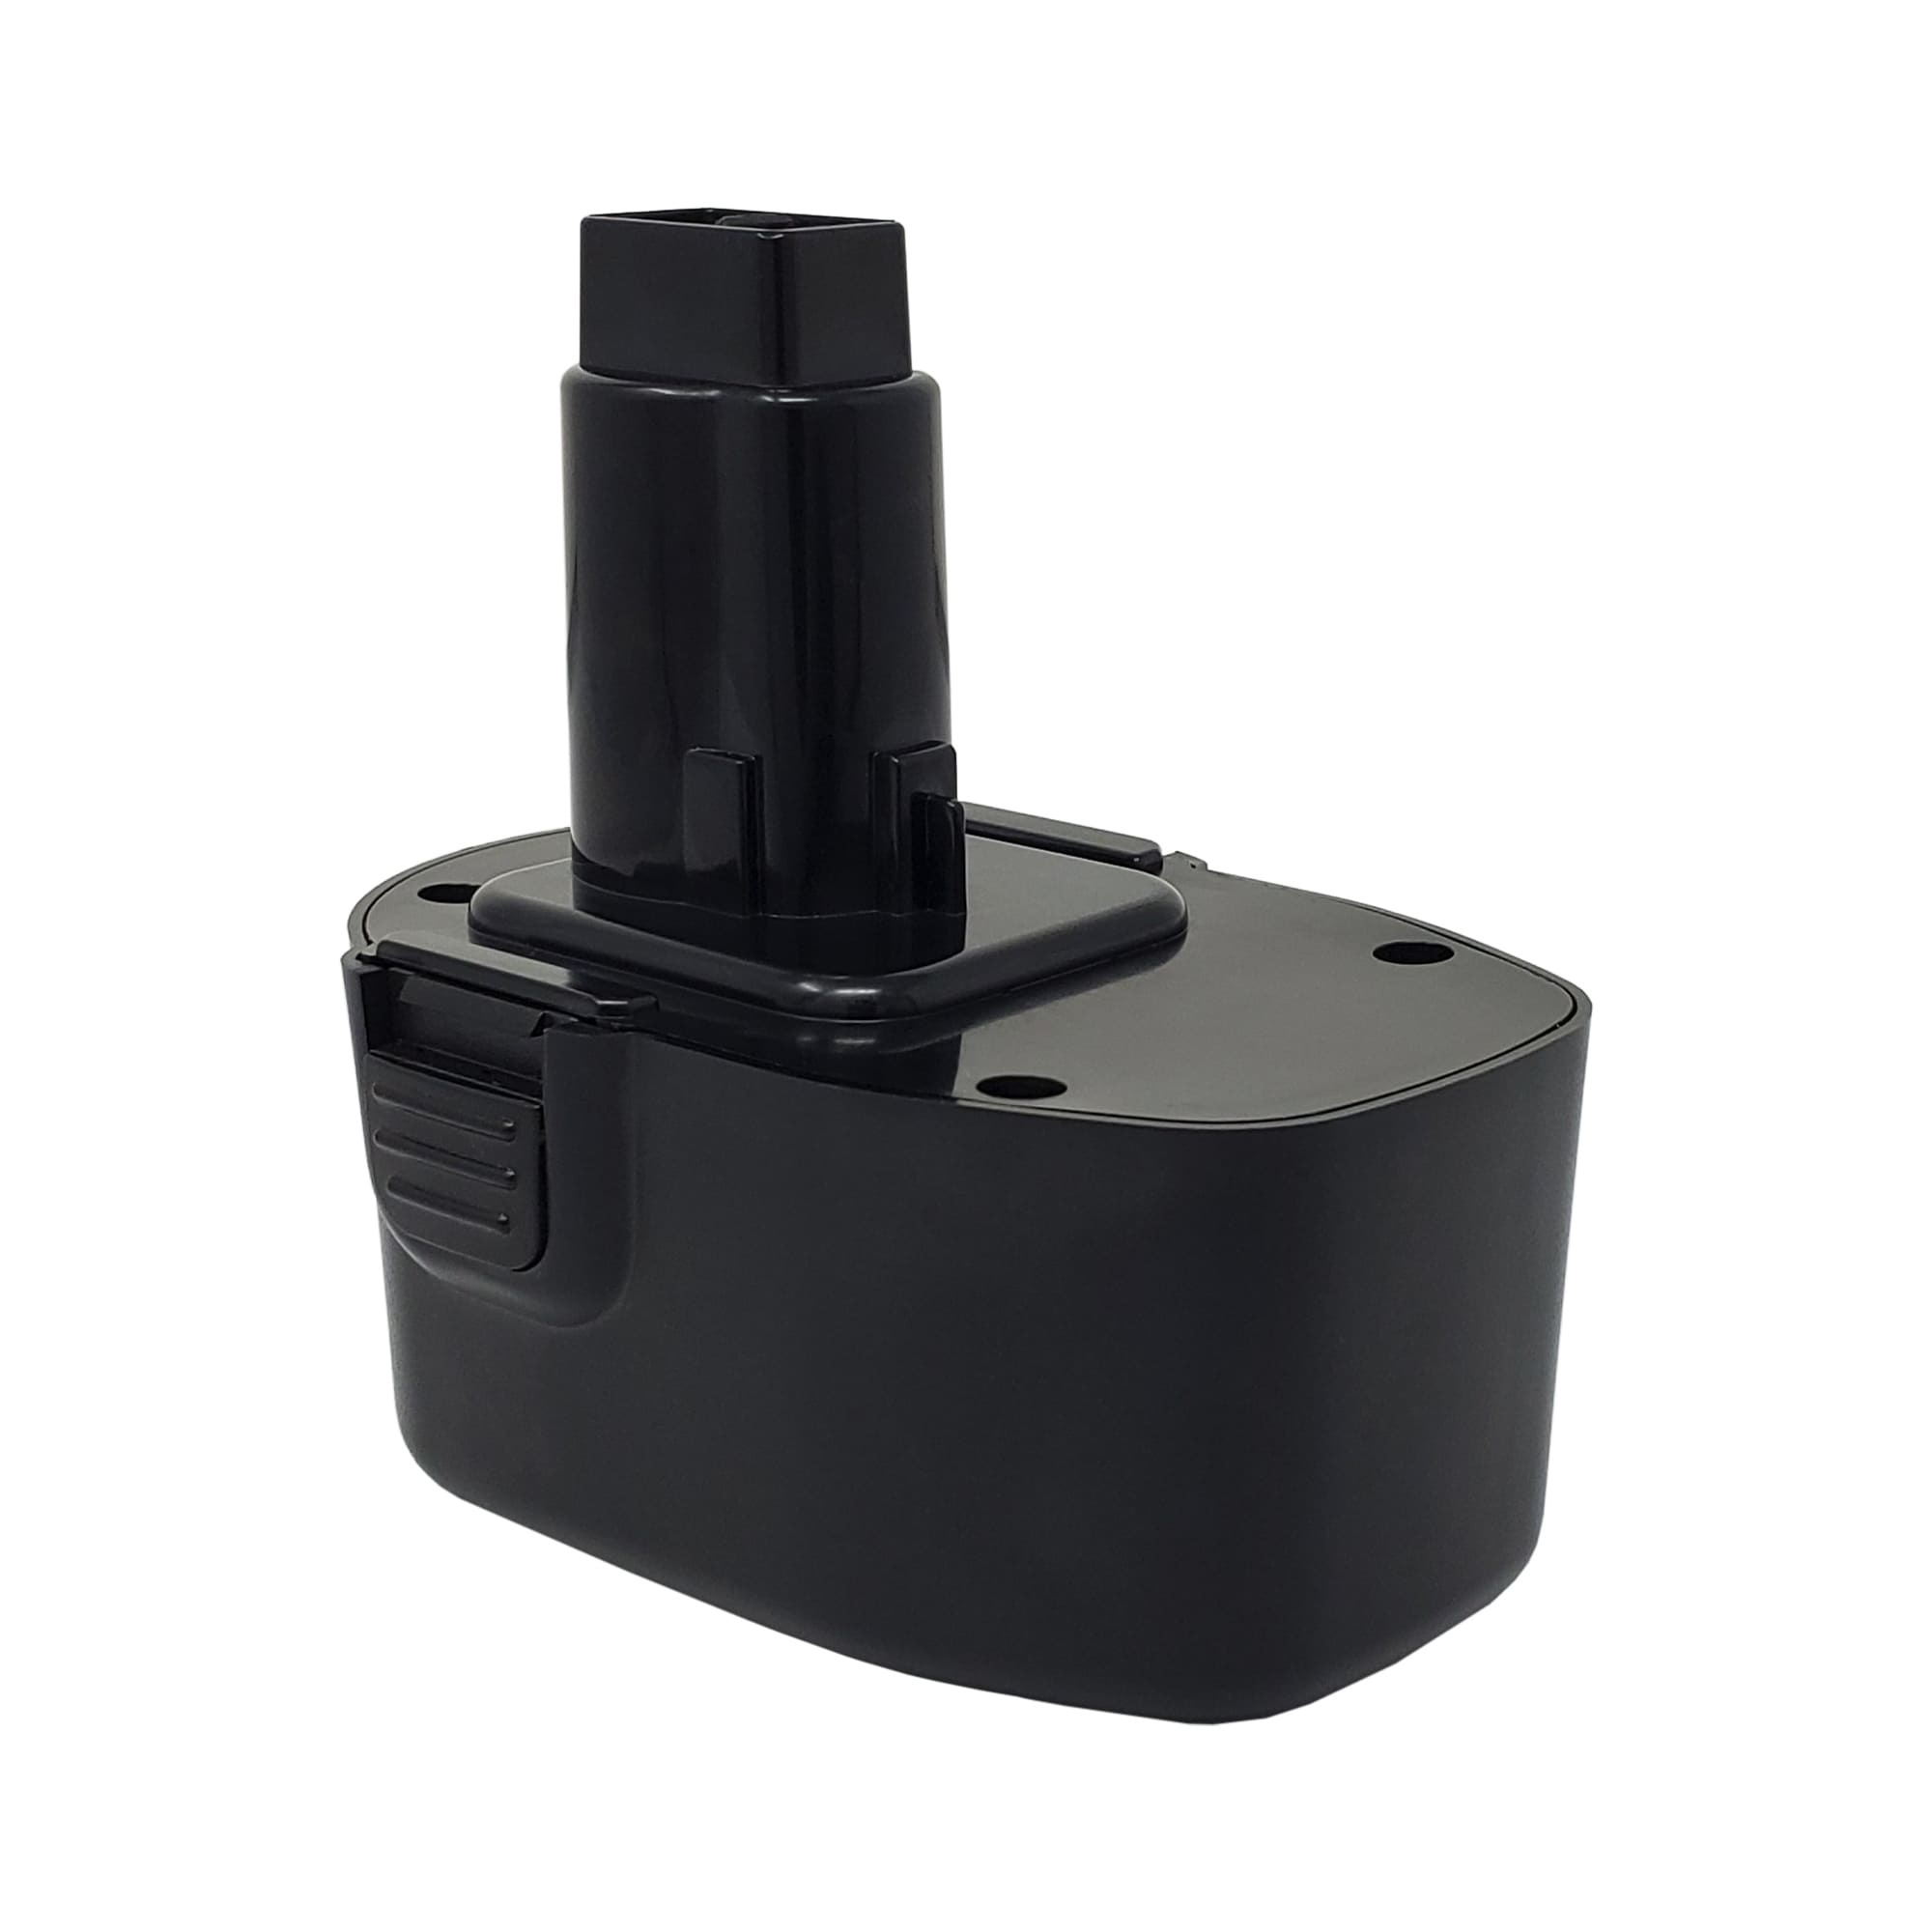 NEW AC Adapter For Black & Decker 14.4volt 1.5AH Drill B&D PS140 Battery Charger 